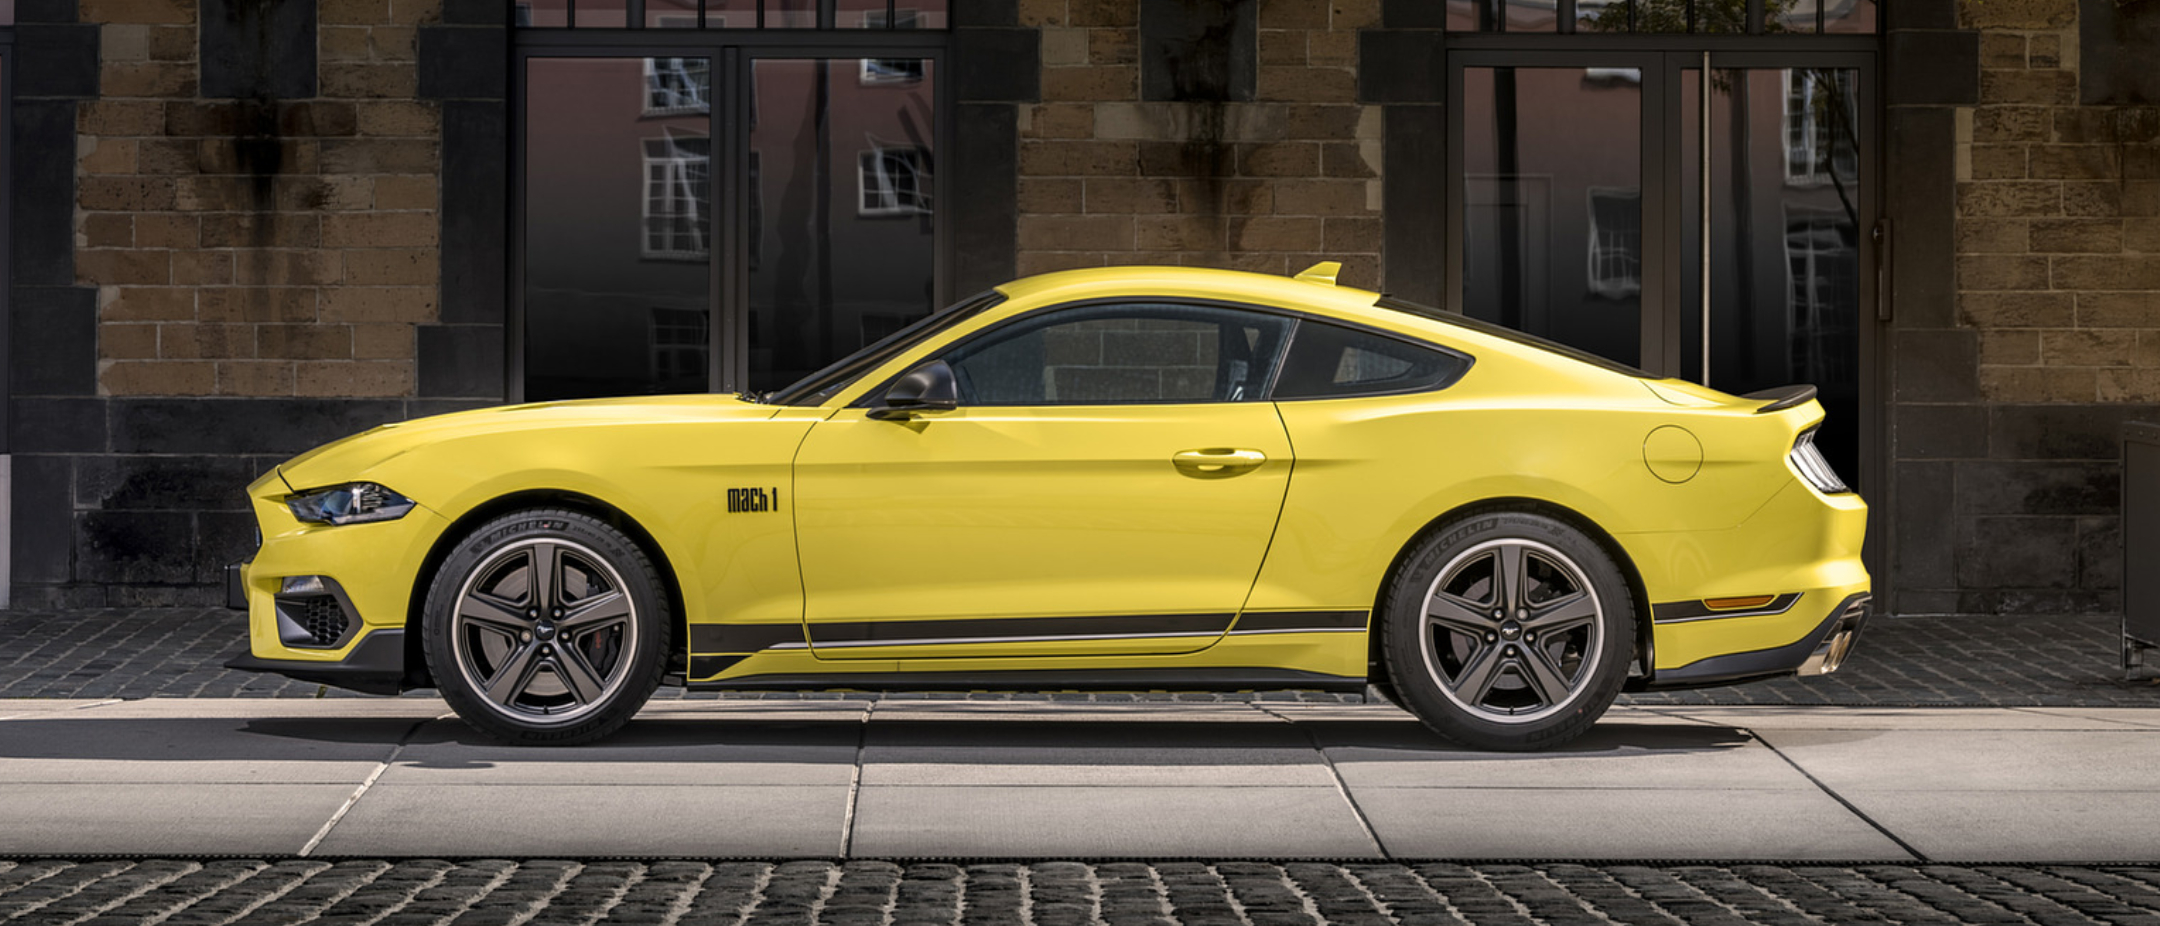 2021 Mustang Colors | 2021 Mustang Paint Codes - 2021 Mustang Colors | 2021 Mustang Paint Codes